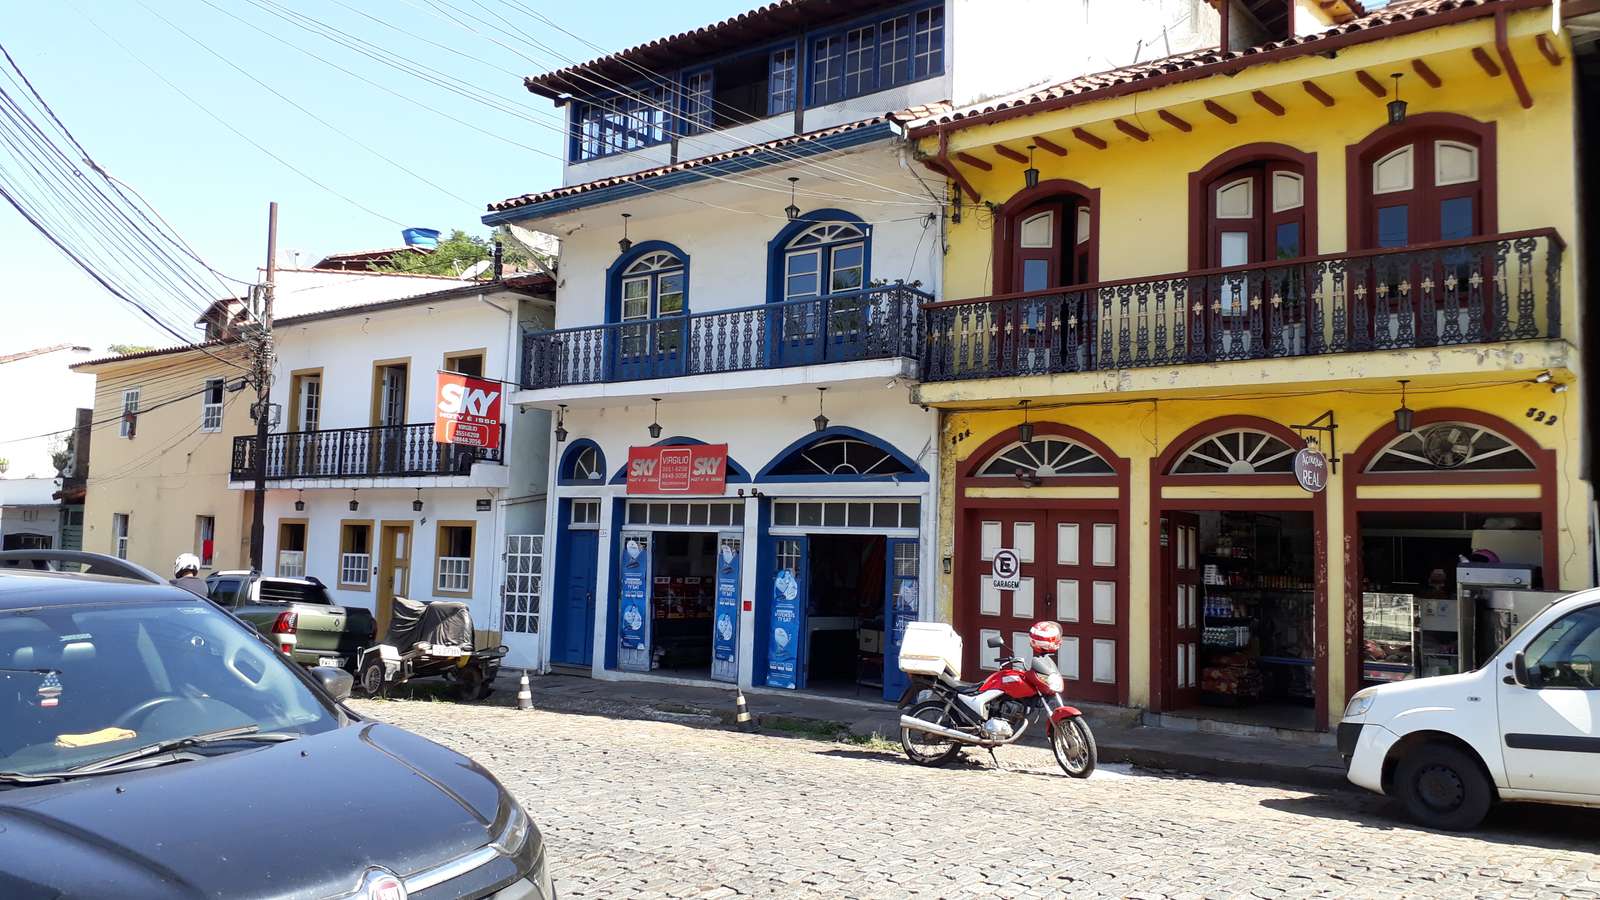 Házak Ouro Preto - MG - Brazília online puzzle